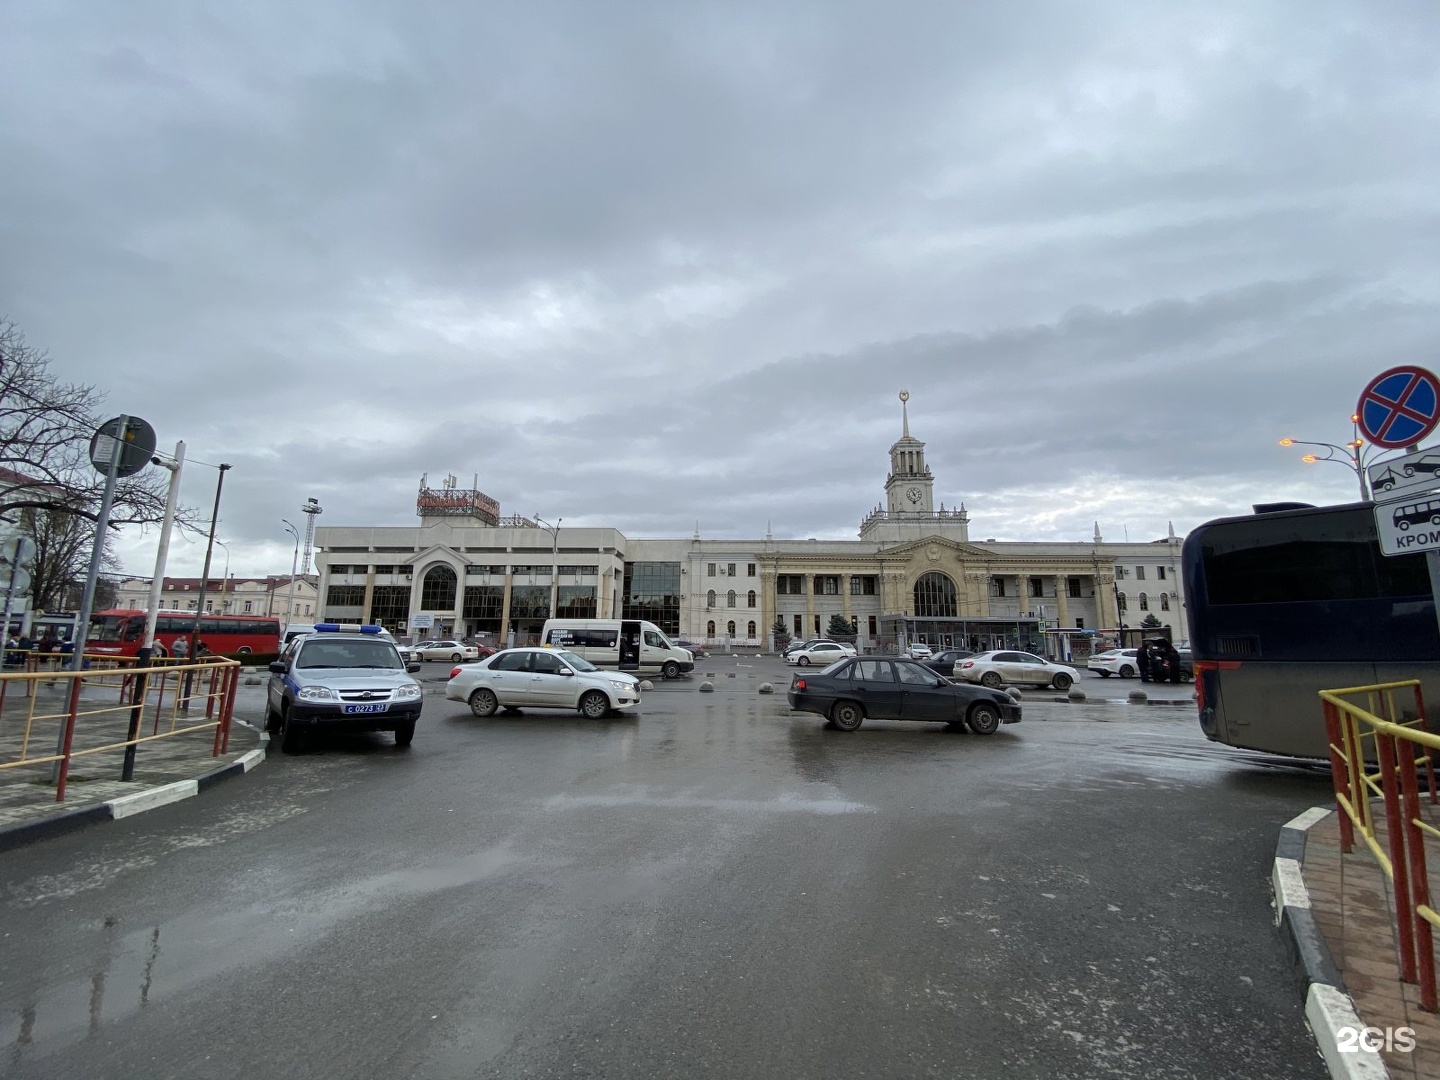 Автовокзал краснодар привокзальная. Привокзальная площадь 1 Краснодар. ЖД вокзал Краснодар Привокзальная площадь. Краснодар Привокзальная площадь 1 Железнодорожный вокзал Краснодар-1. Привокзальная площадь 9 Краснодар.